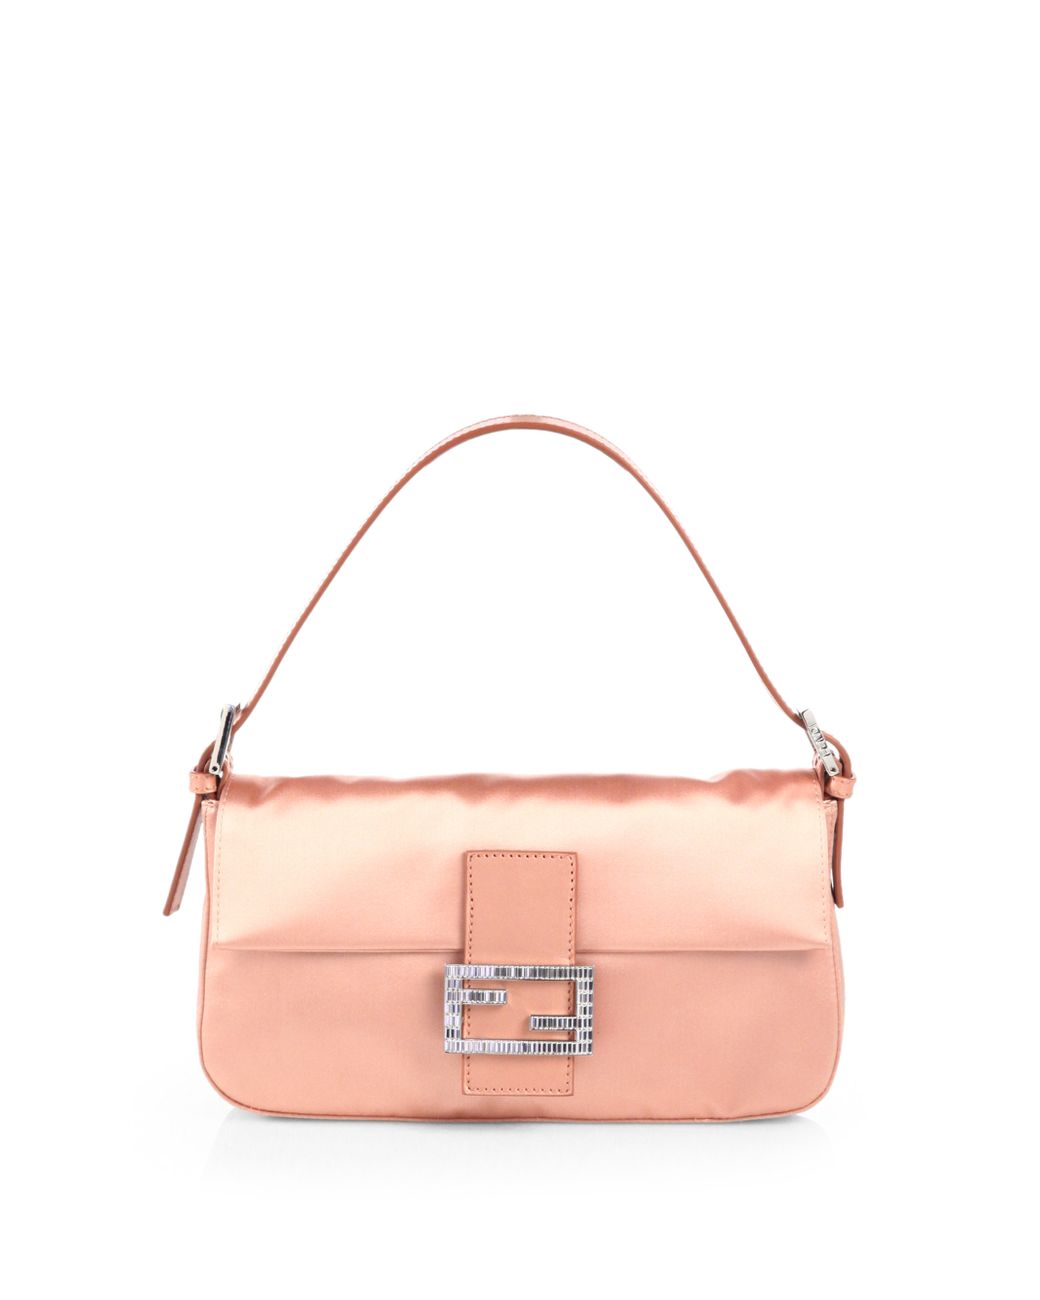 Fendi Raso Medium Satin Baguette Shoulder Bag in Pink | Lyst